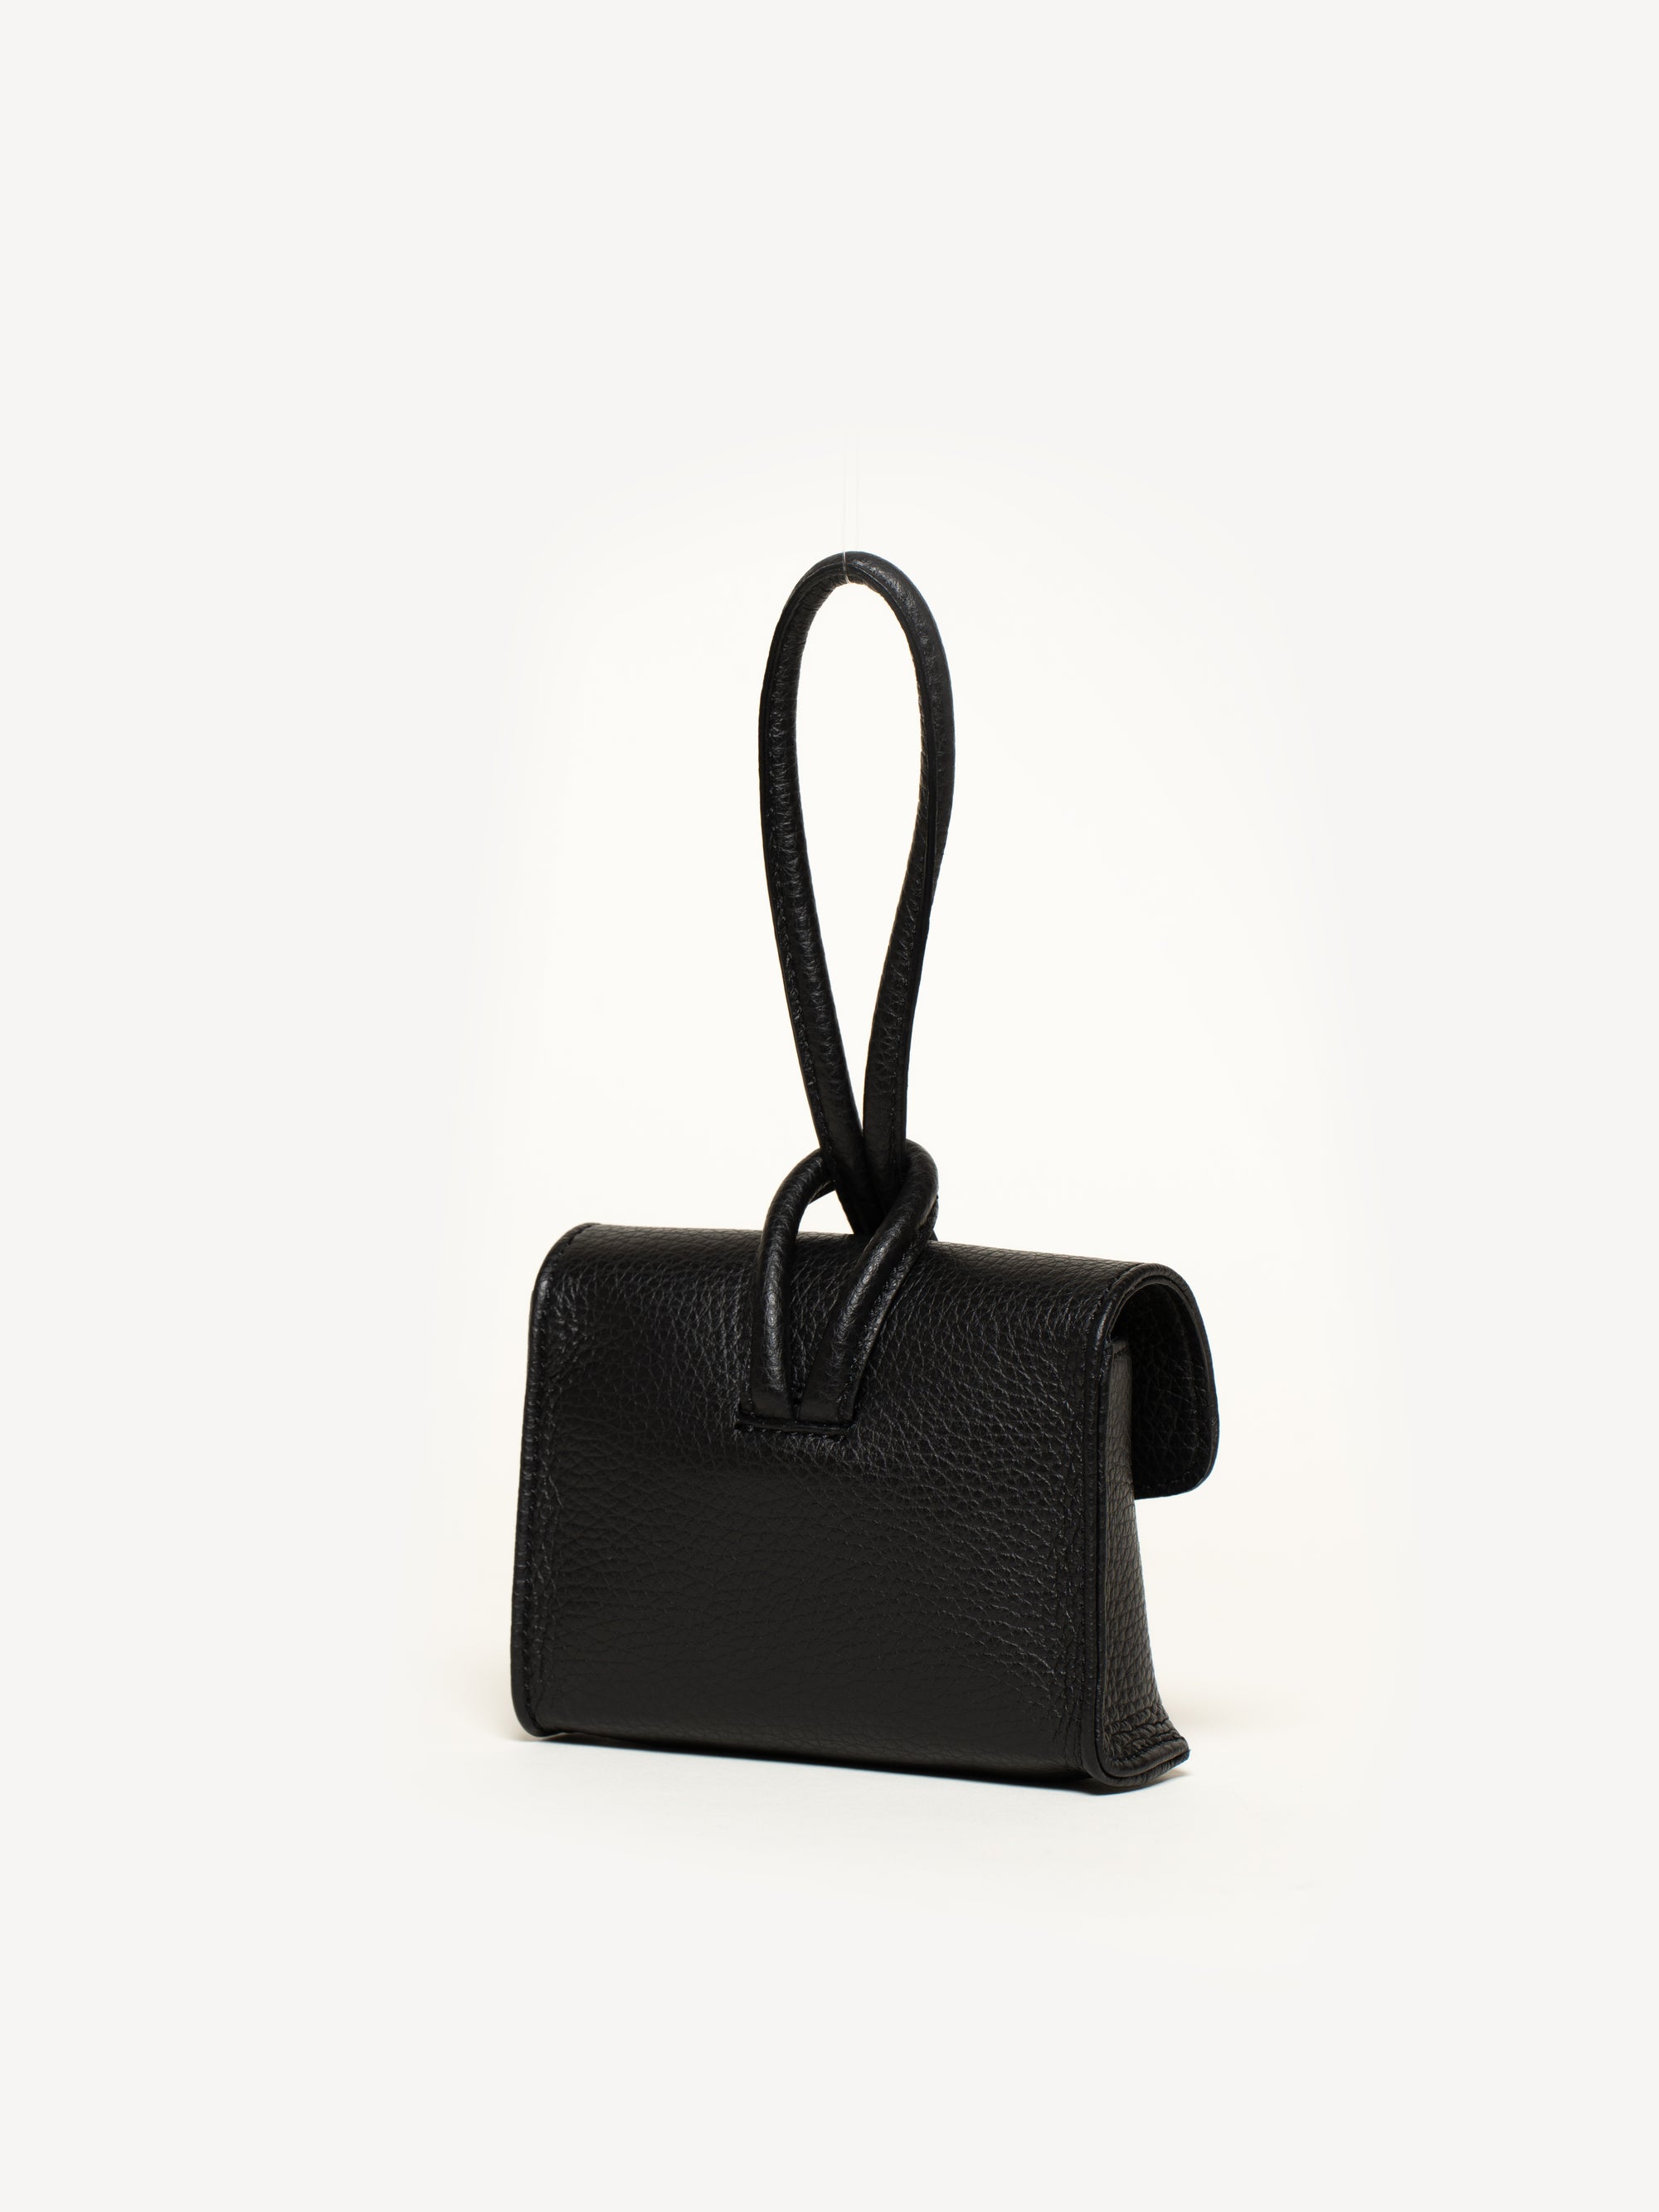 The Francesca Mini - Black - Tumbled Leather - M.Gemi